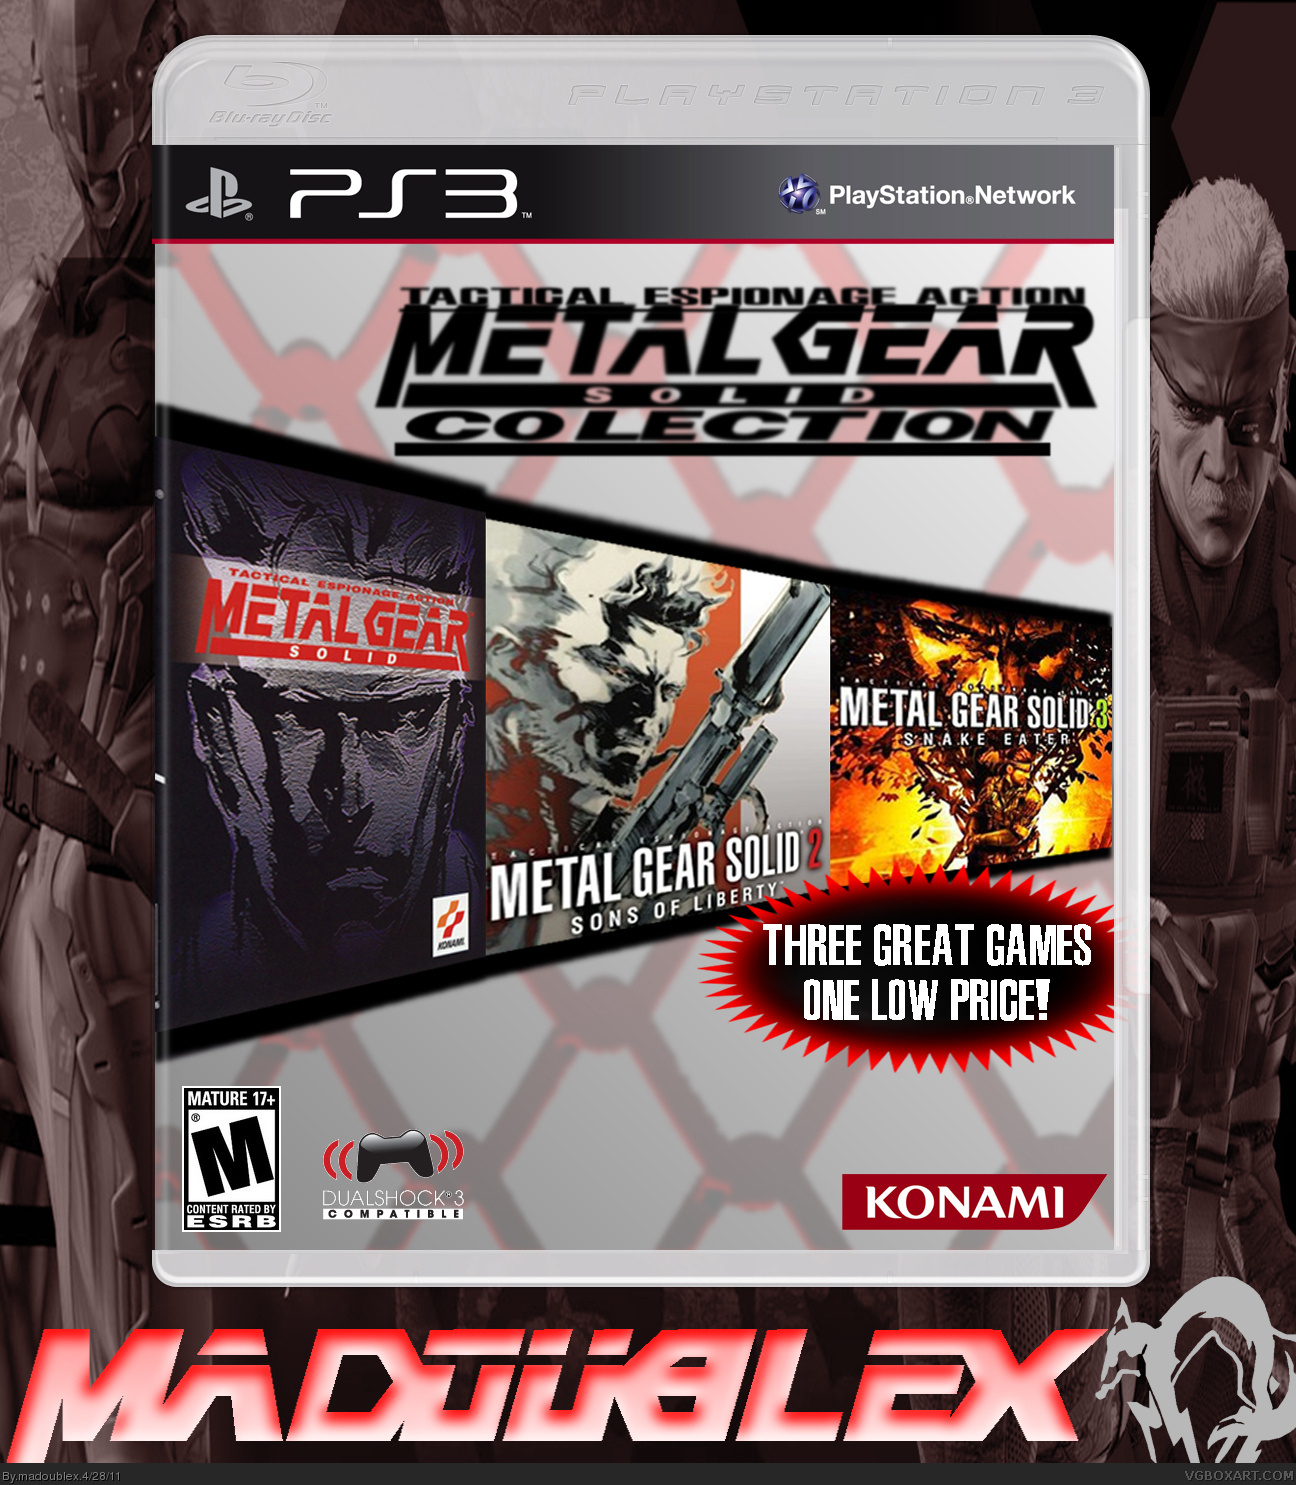 Metal Gear Solid: ORIGINAL TRILOGY box cover